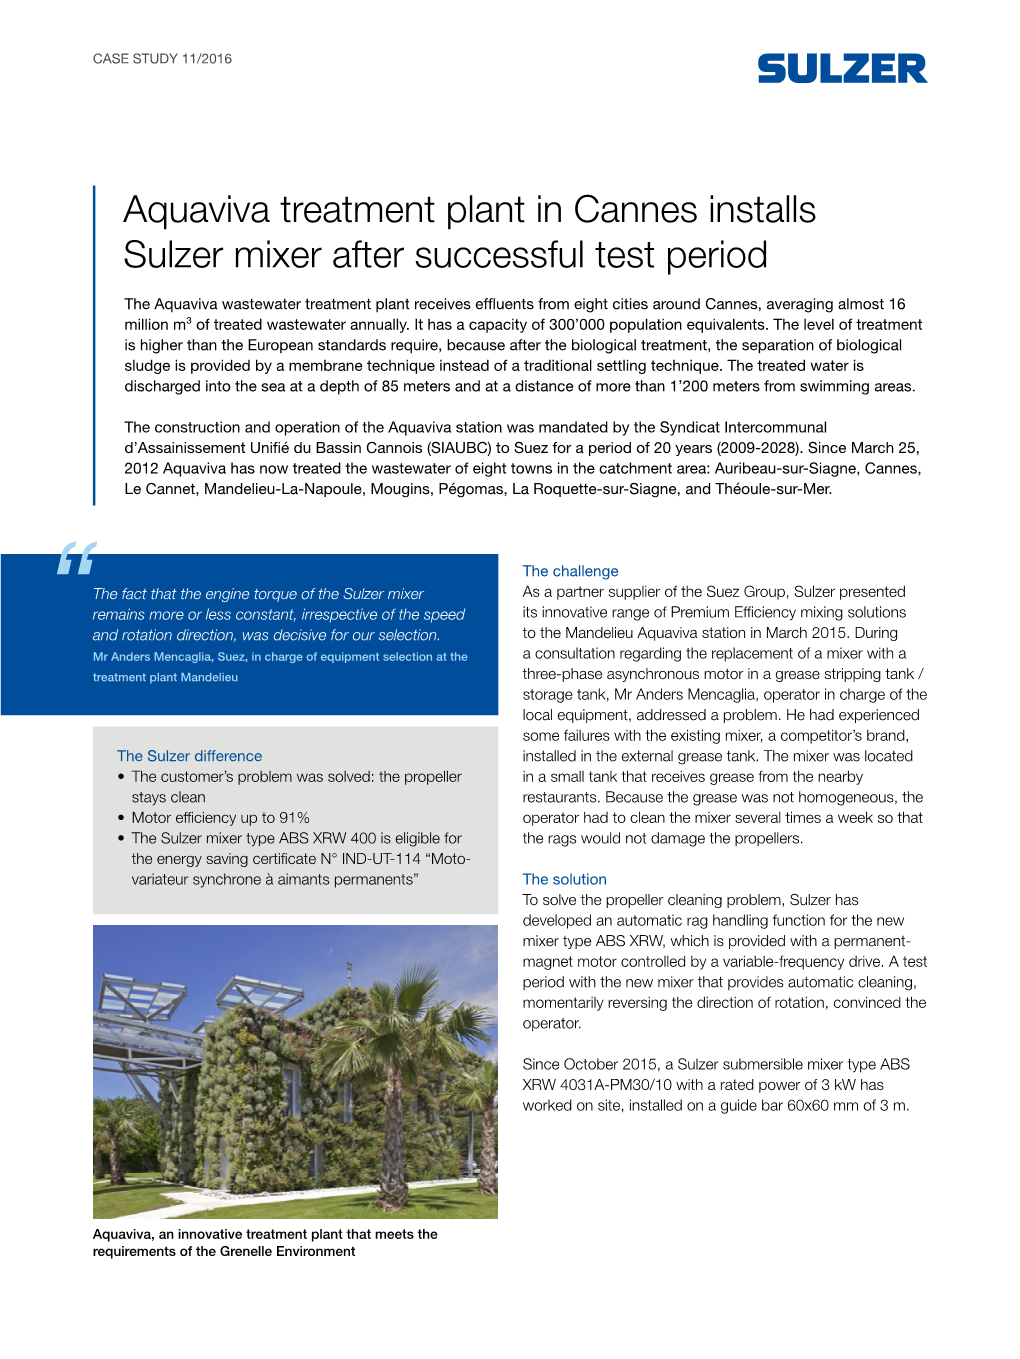 Aquaviva Treatment Plant in Cannes Installs Sulzer Mixer After Successful Test Period